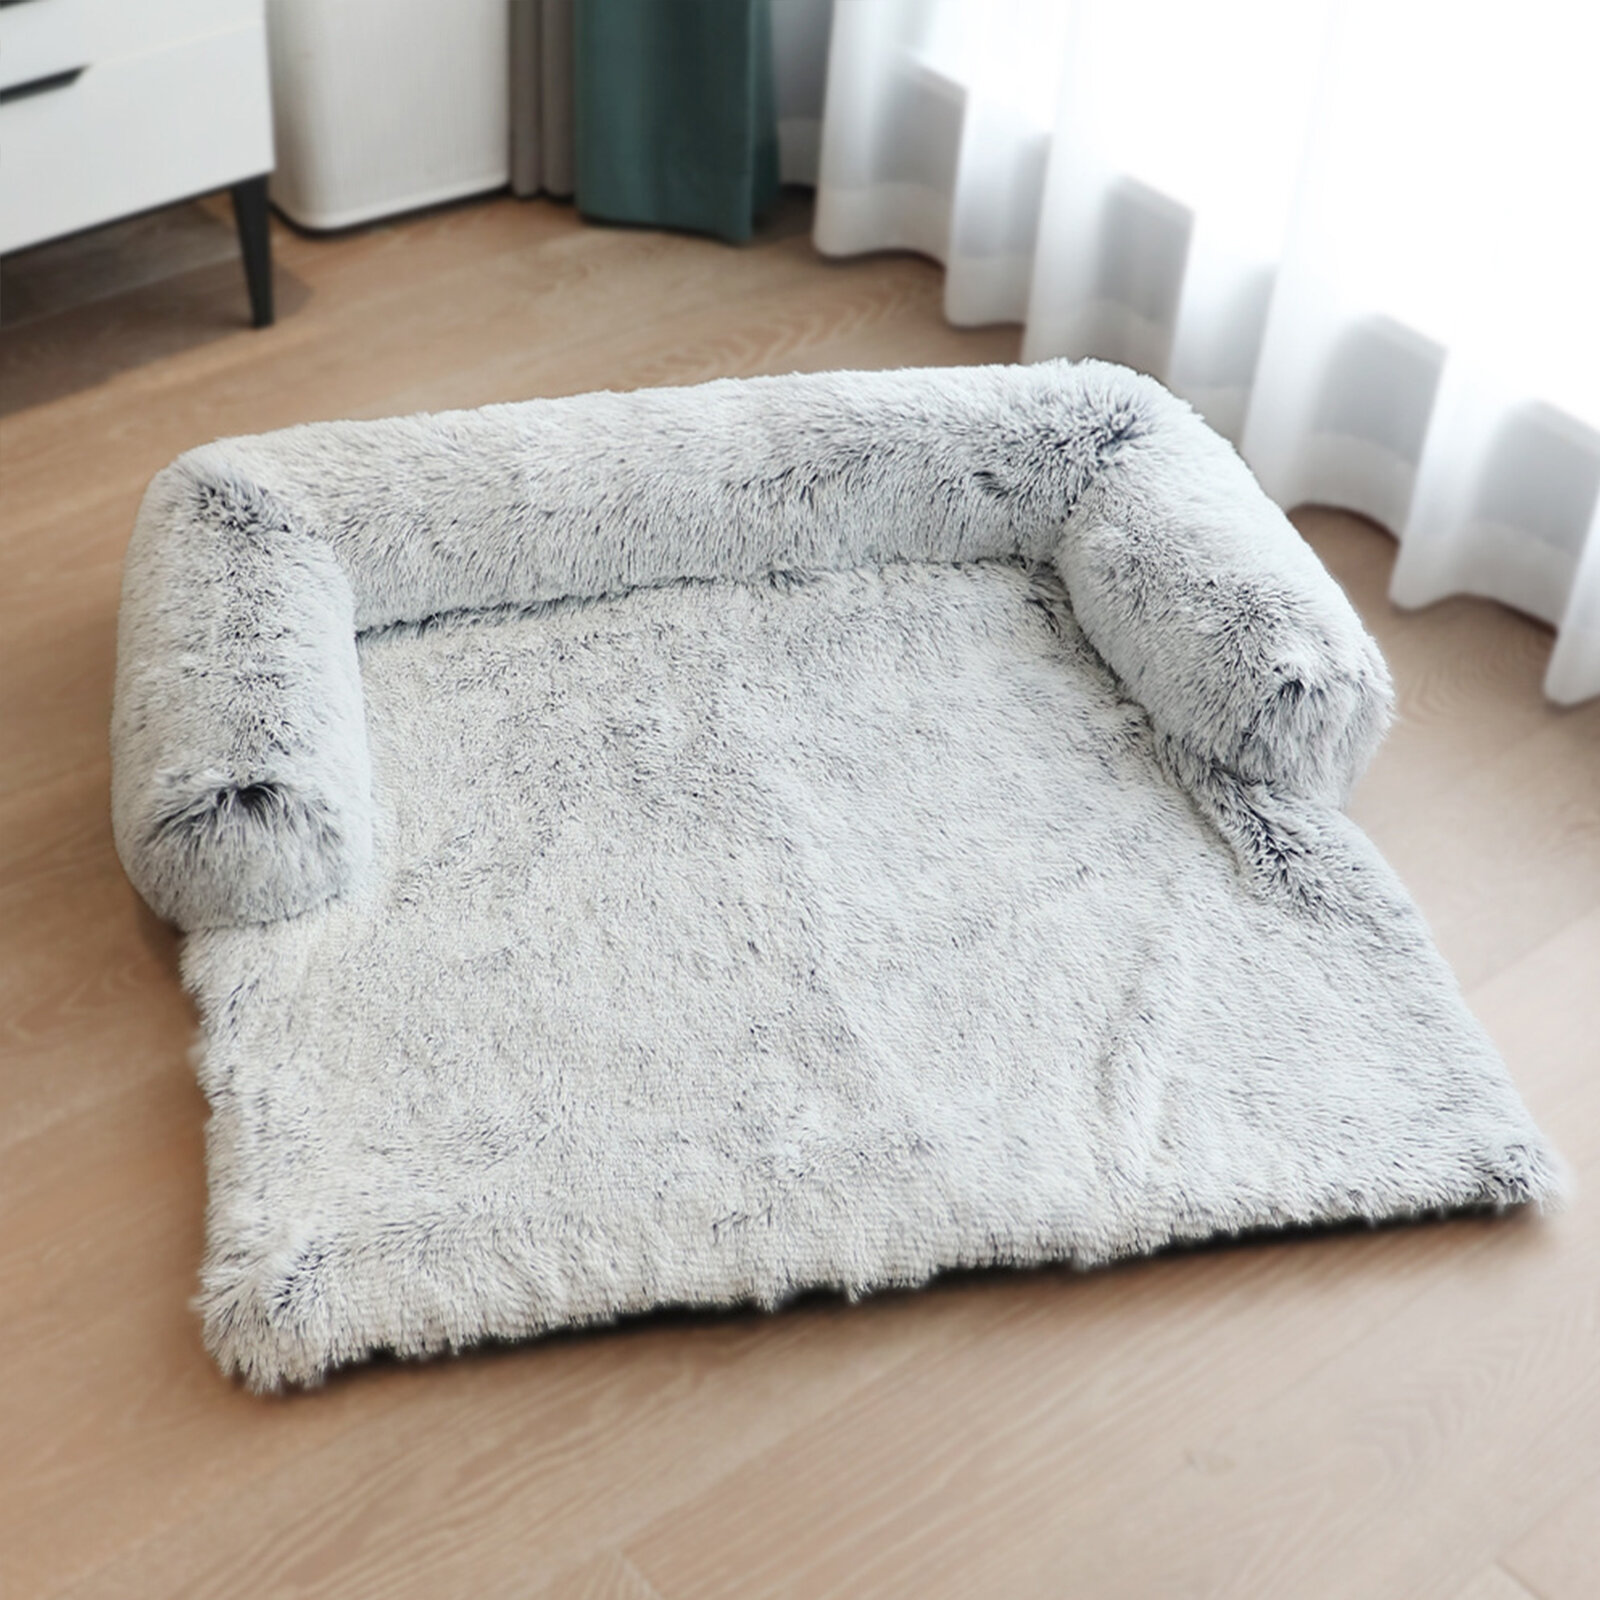 HTE-sofa decorative cushion filler, super soft and fluffy 1/2/4/6